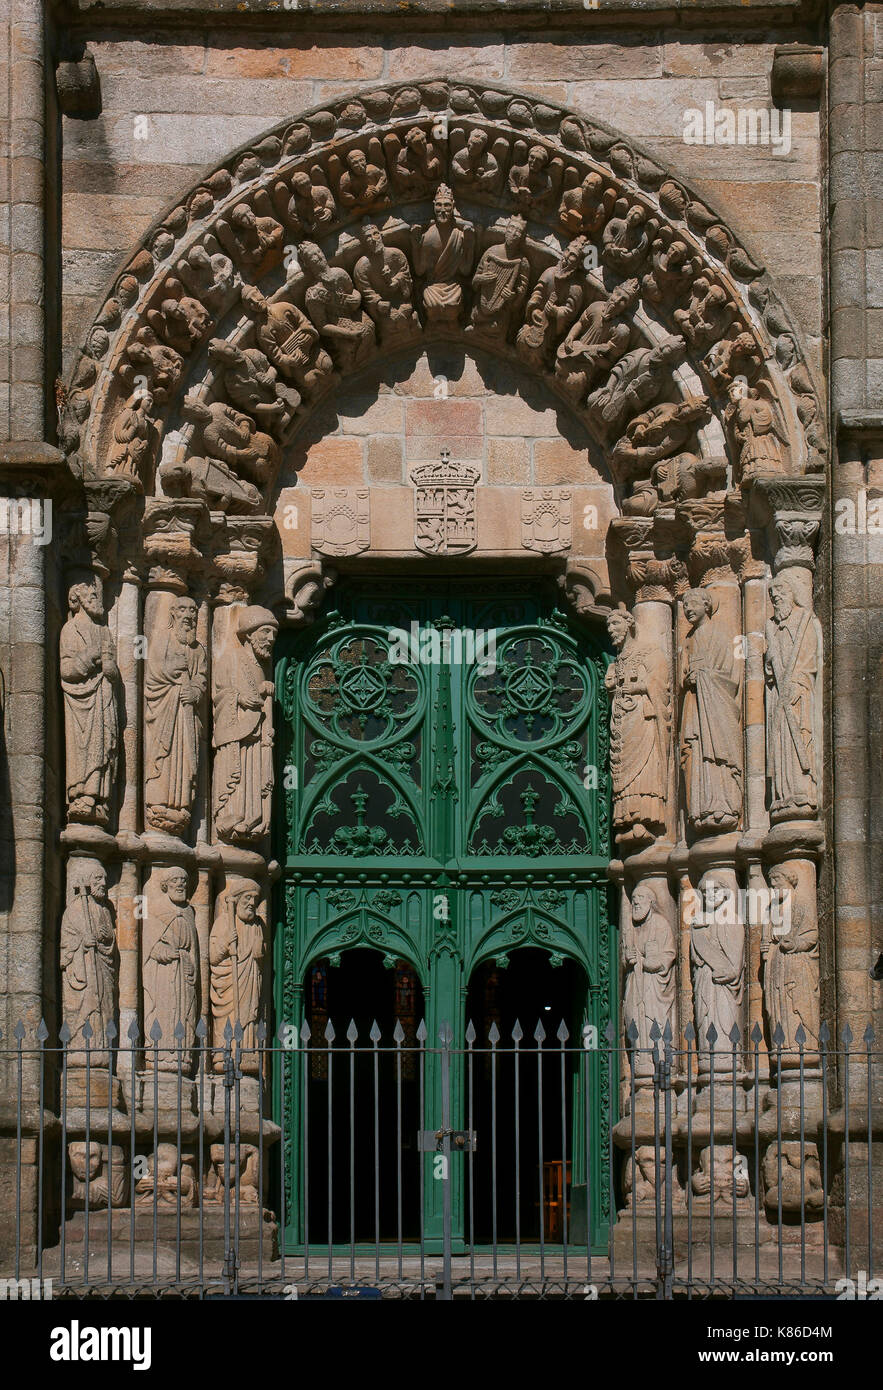 Church of San Martin (15th century), Door with the twelve apostles, Noya, La Coruna province, Region of Galicia, Spain, Europe Stock Photo